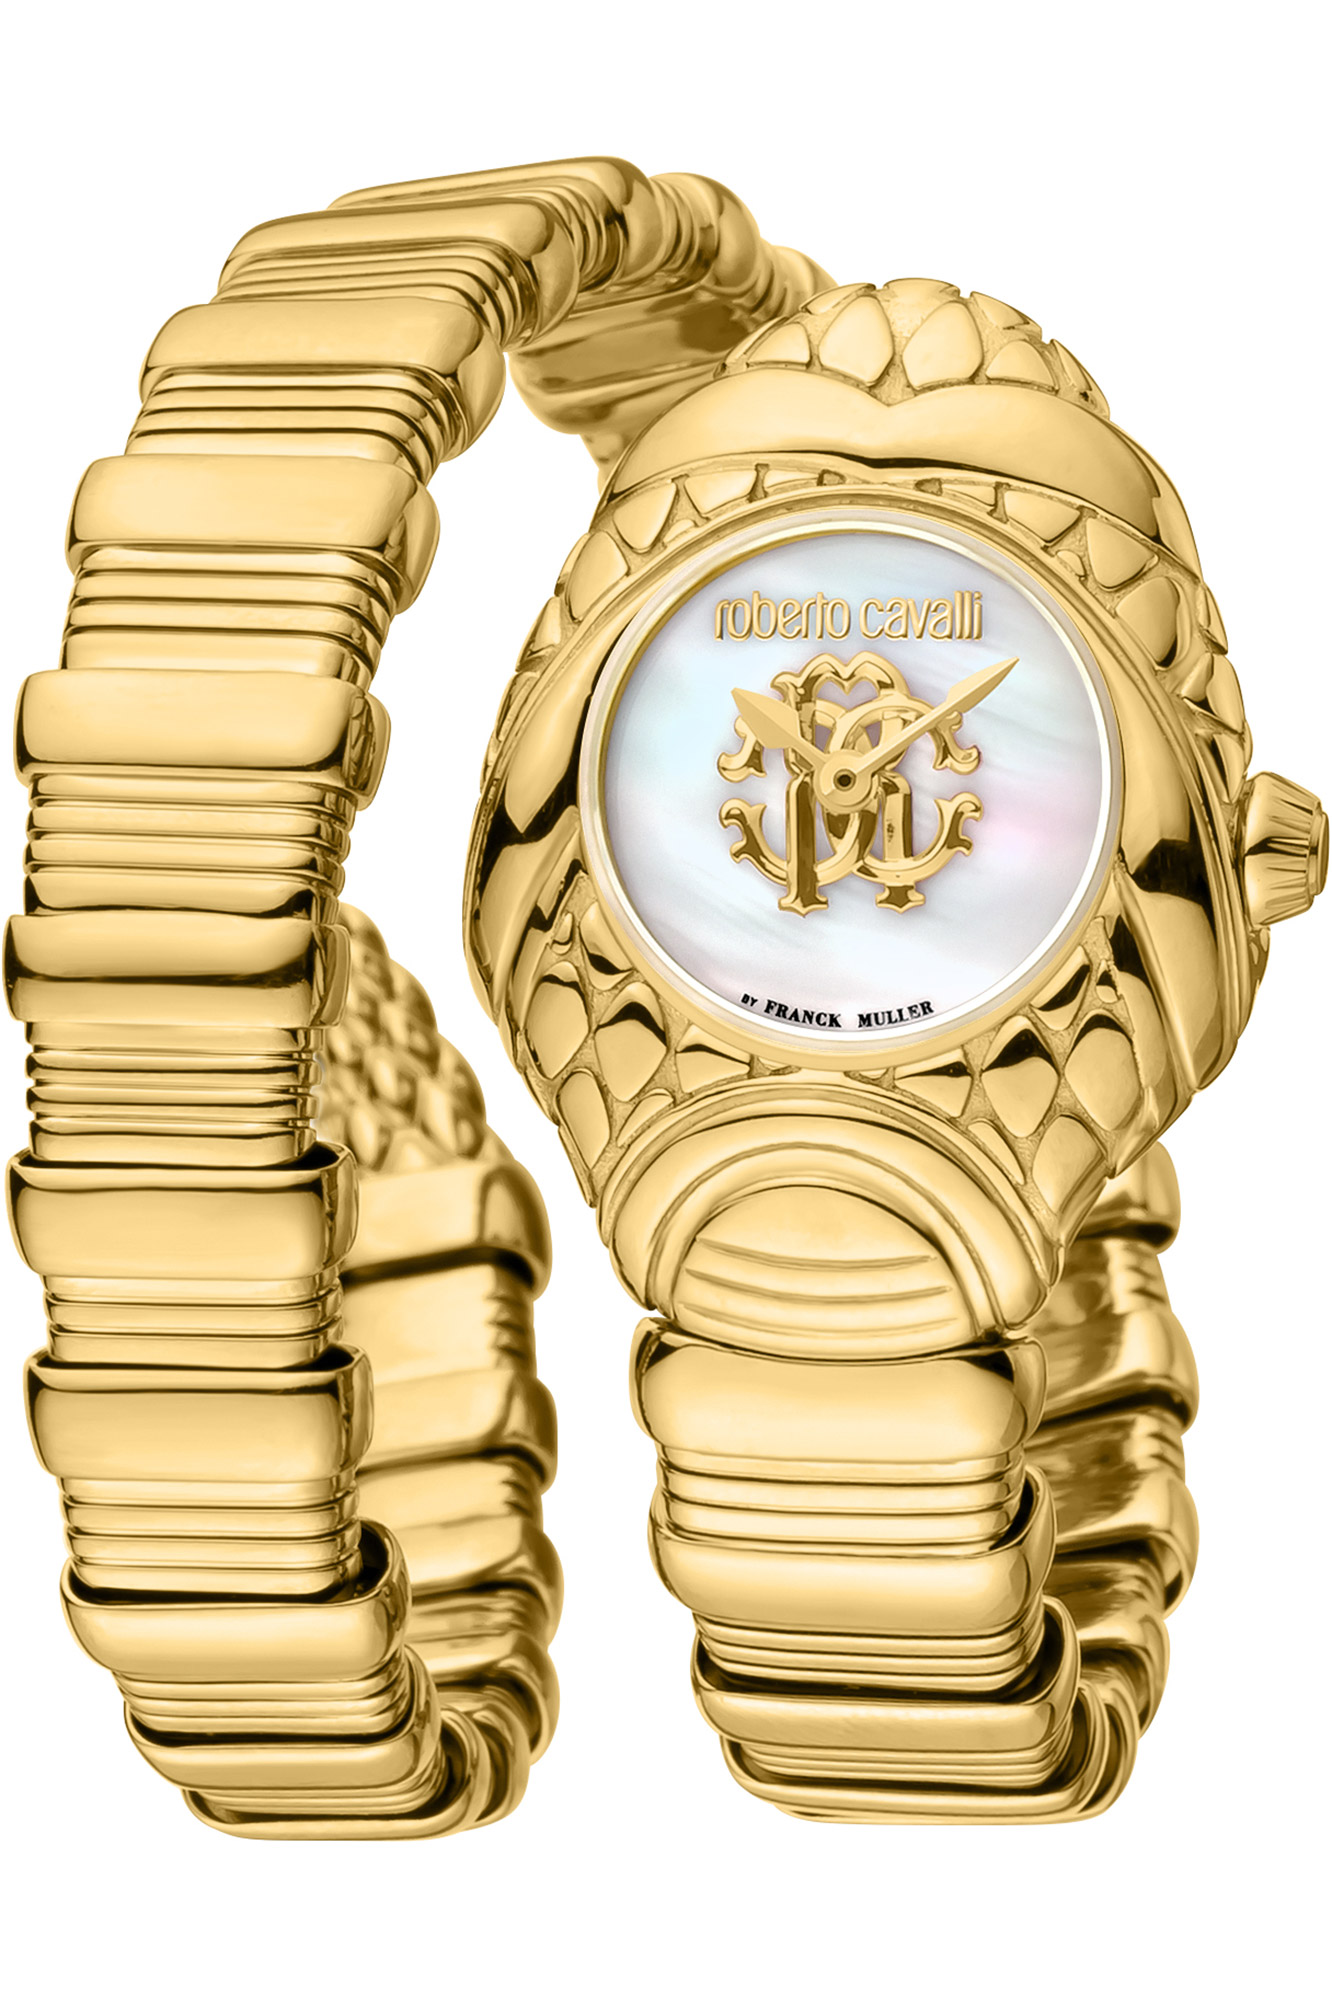 Reloj Roberto Cavalli by Franck Muller rv1l162m0021